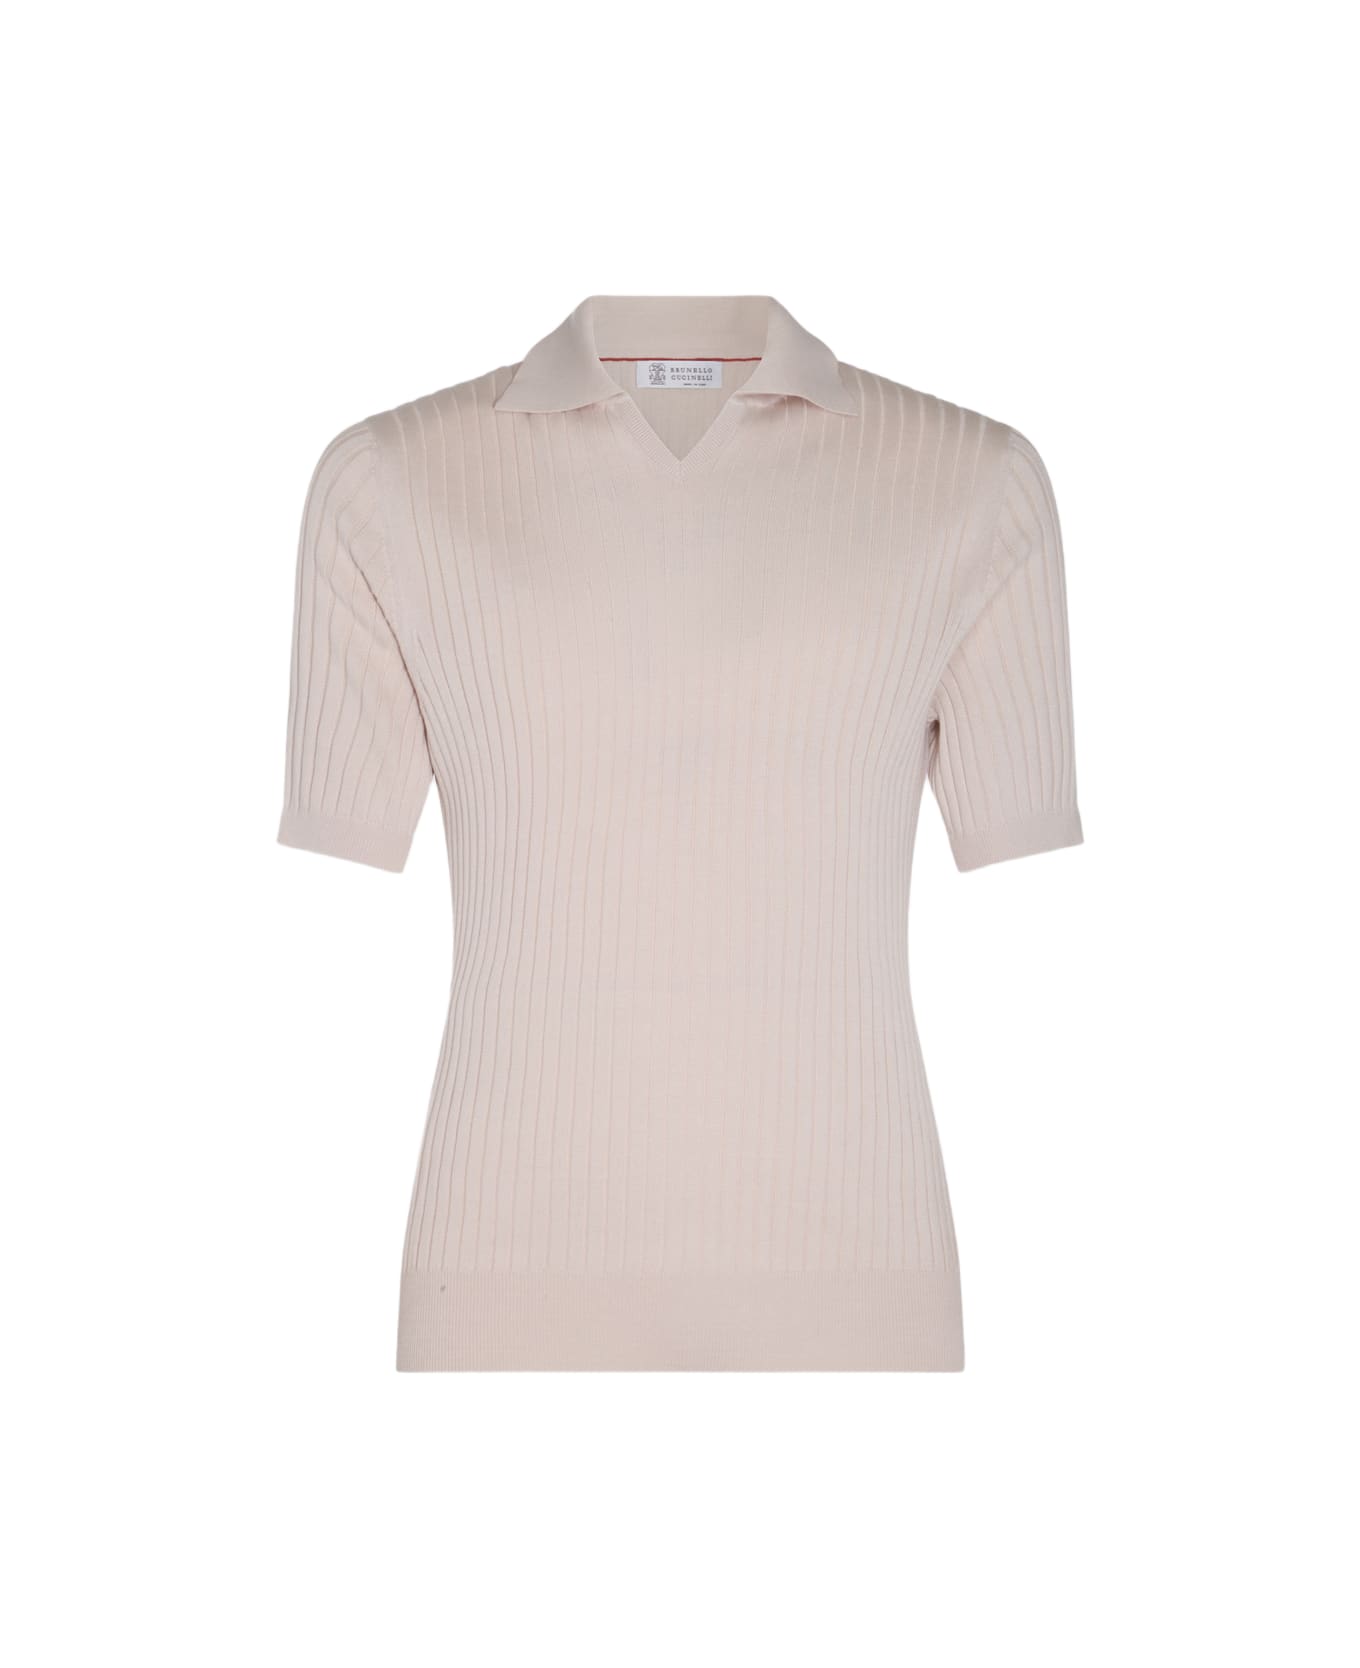 Brunello Cucinelli Light Beige Cotton Polo Shirt - Beige ポロシャツ